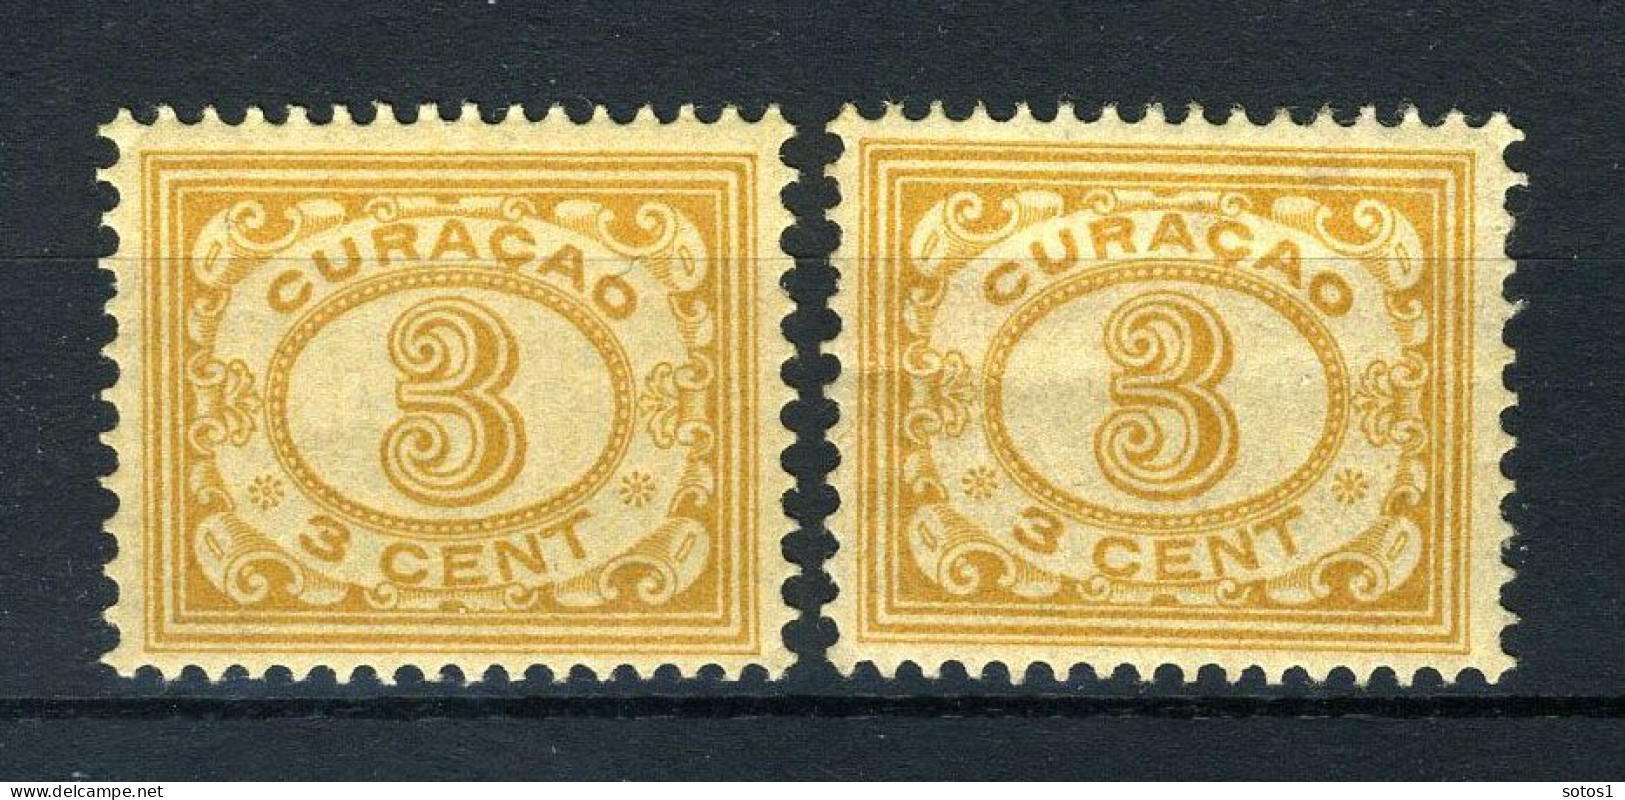 CURACAO 49 MH 1915-1931 - Cijfer - Curacao, Netherlands Antilles, Aruba